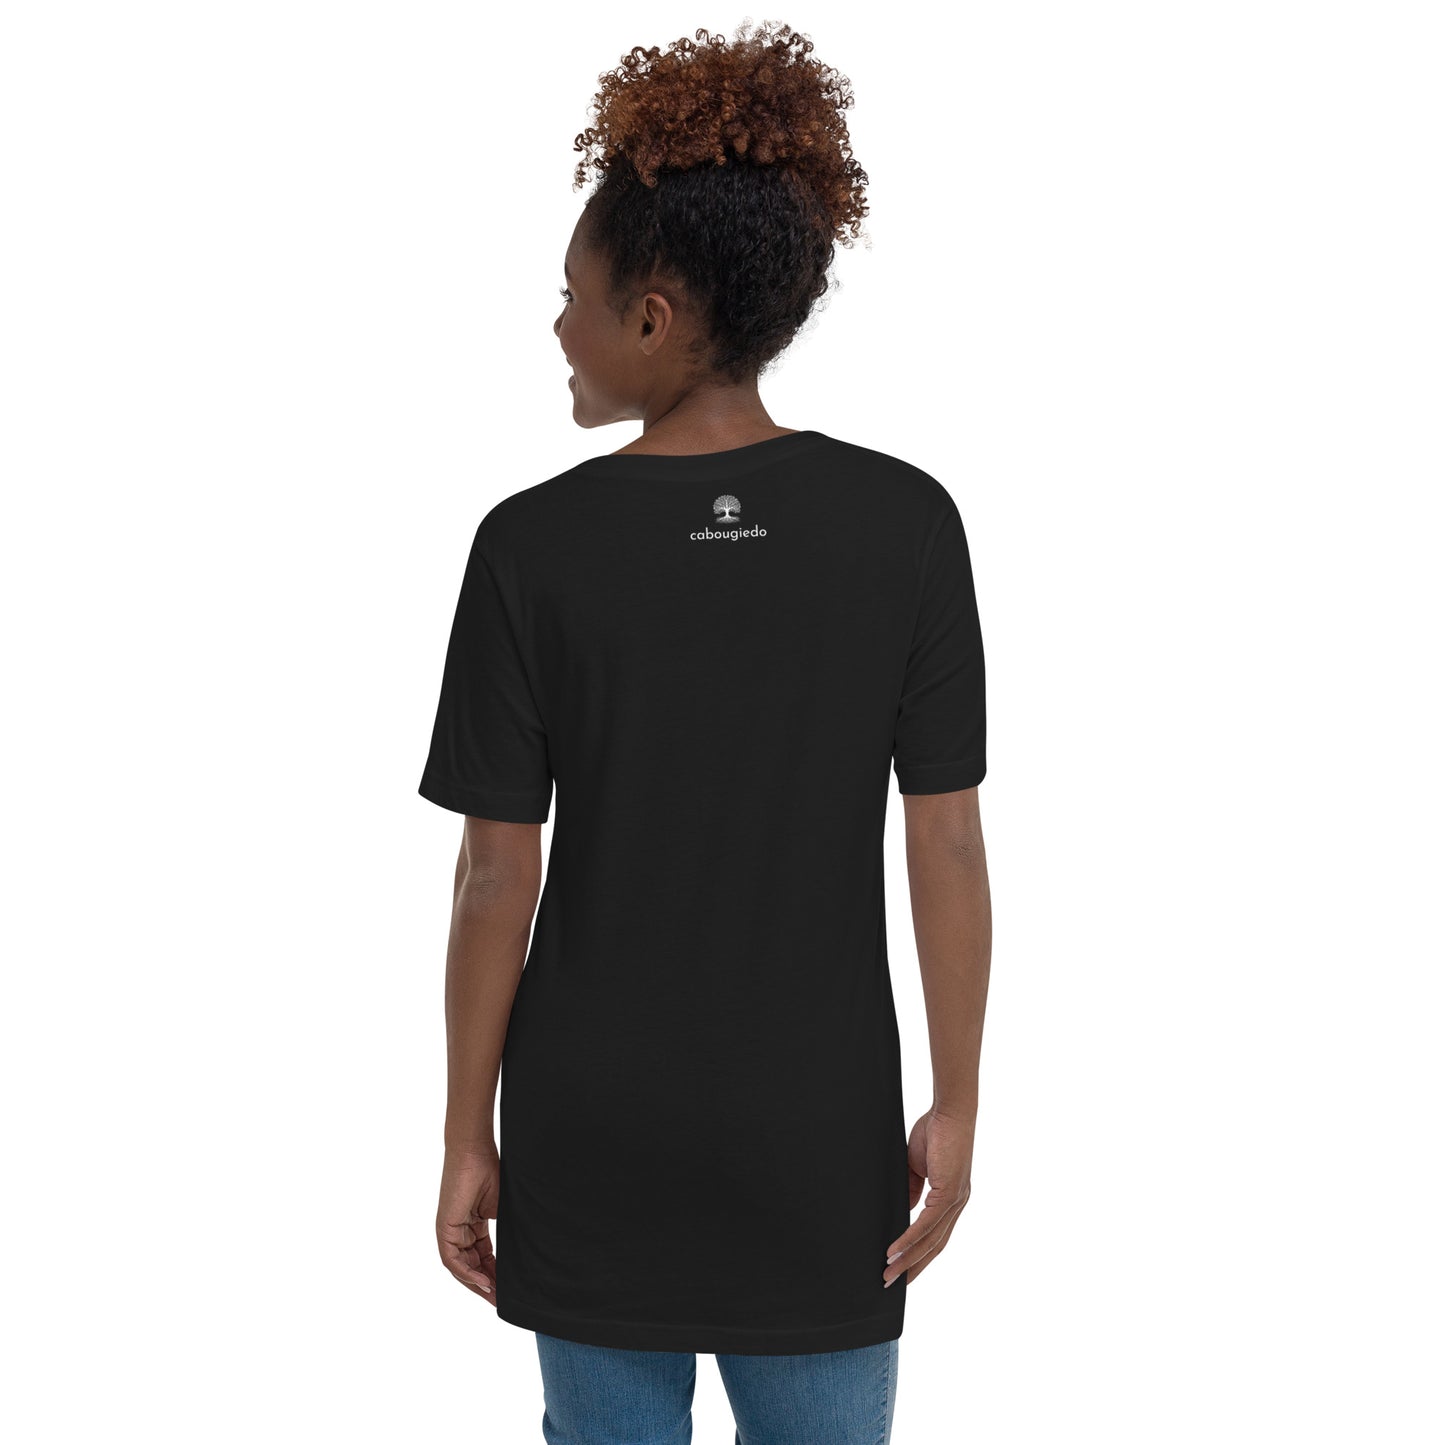 Unisex Short Sleeve V-Neck T-Shirt - I Am Black History